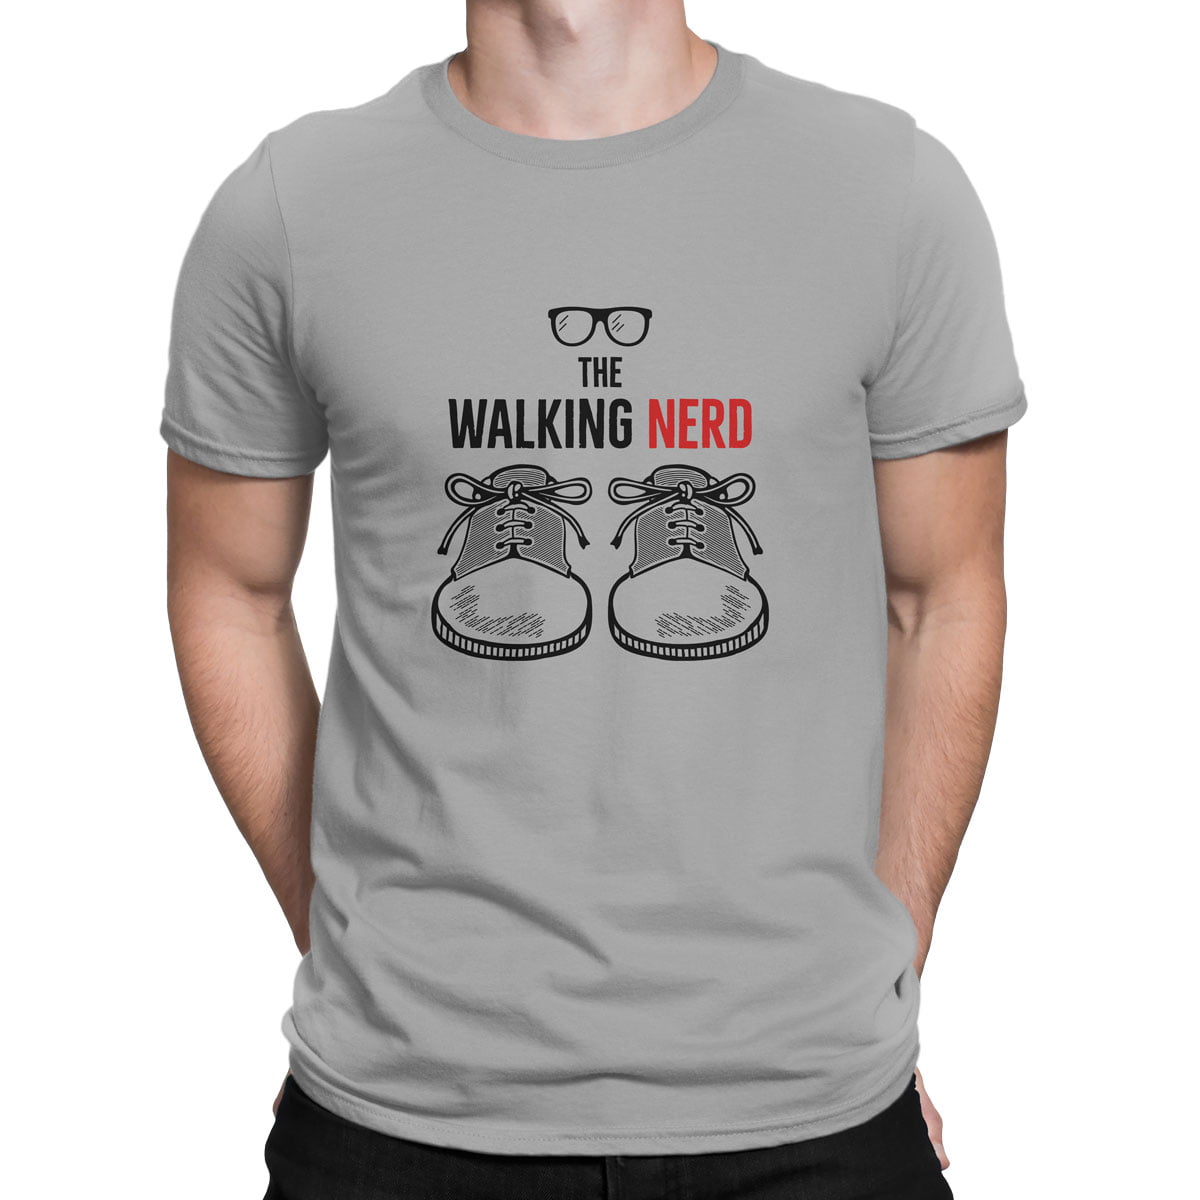 The walking nerd tisort erkek g - the walking nerd t-shirt - figurex